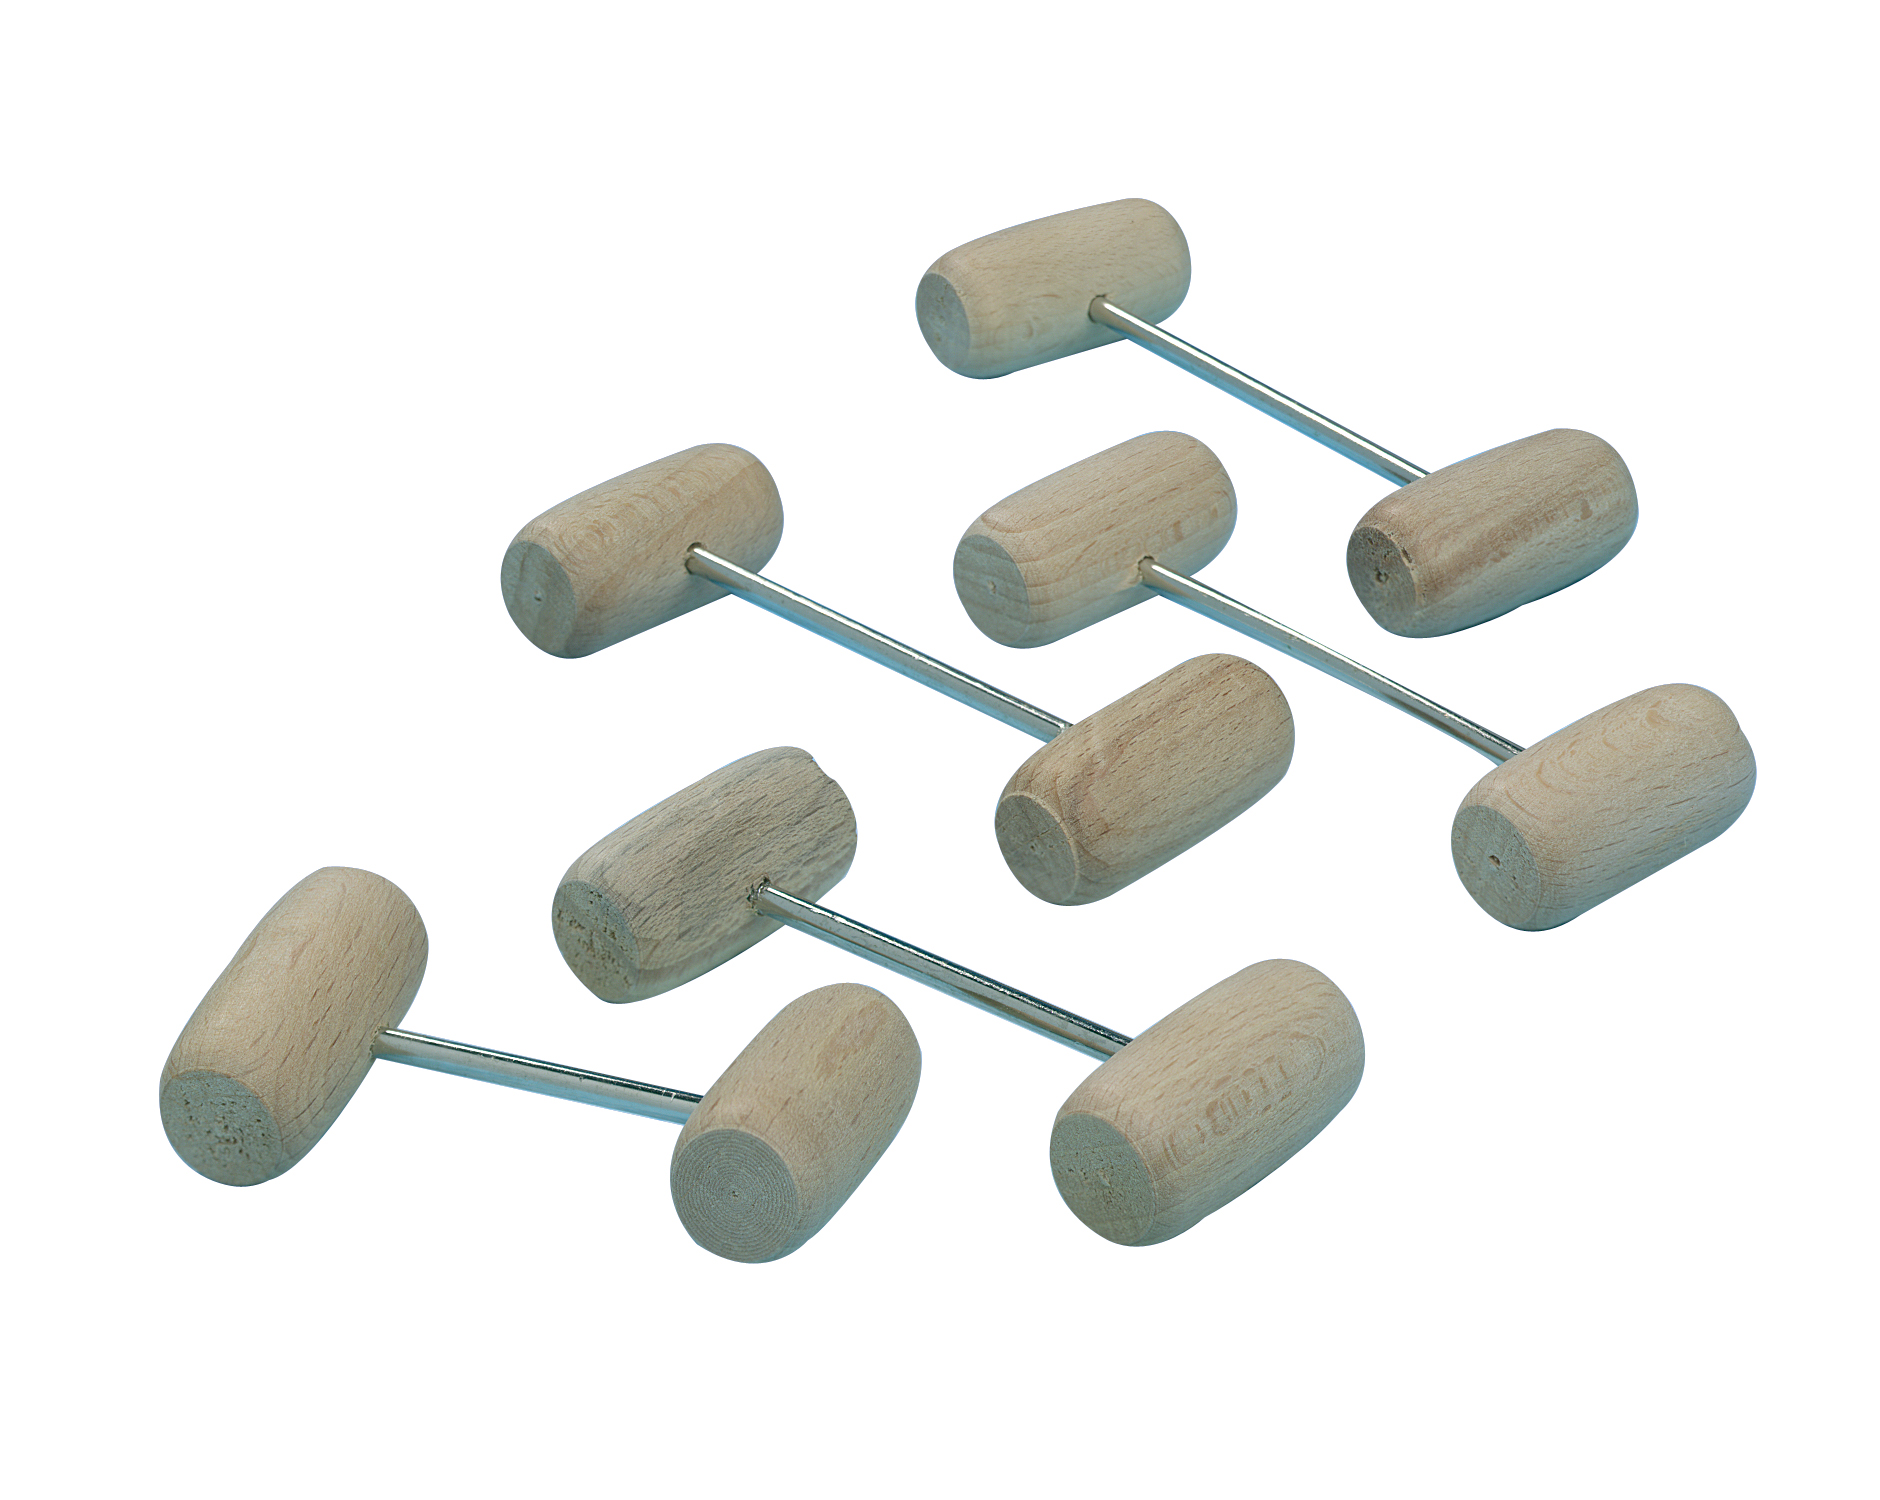 BOVIVET prolapse pins with wooden balls 40 mm, 12/pk